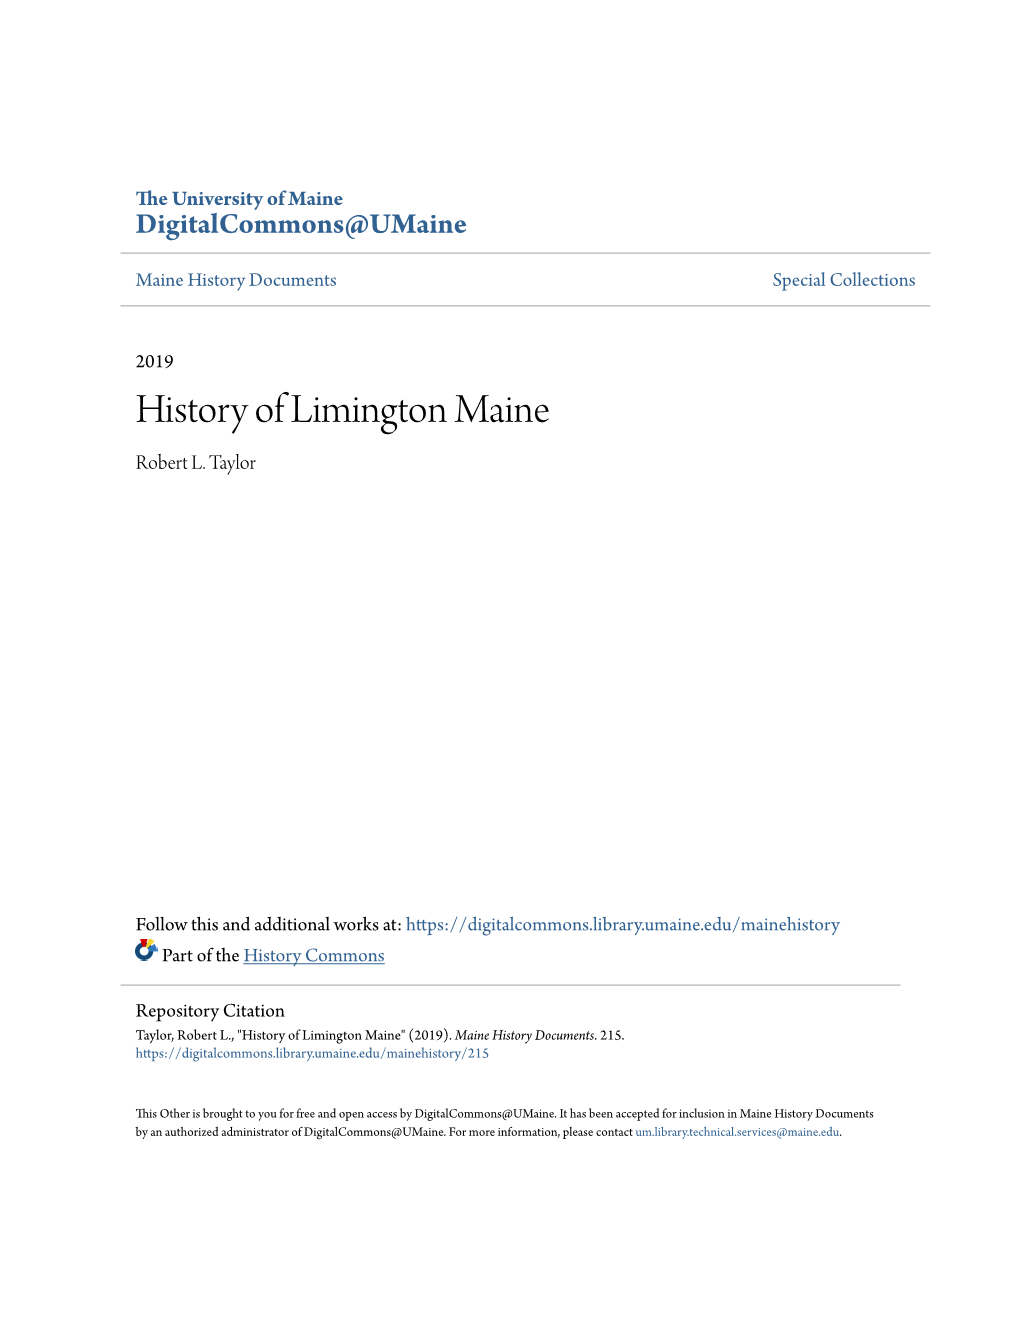 History of Limington Maine Robert L